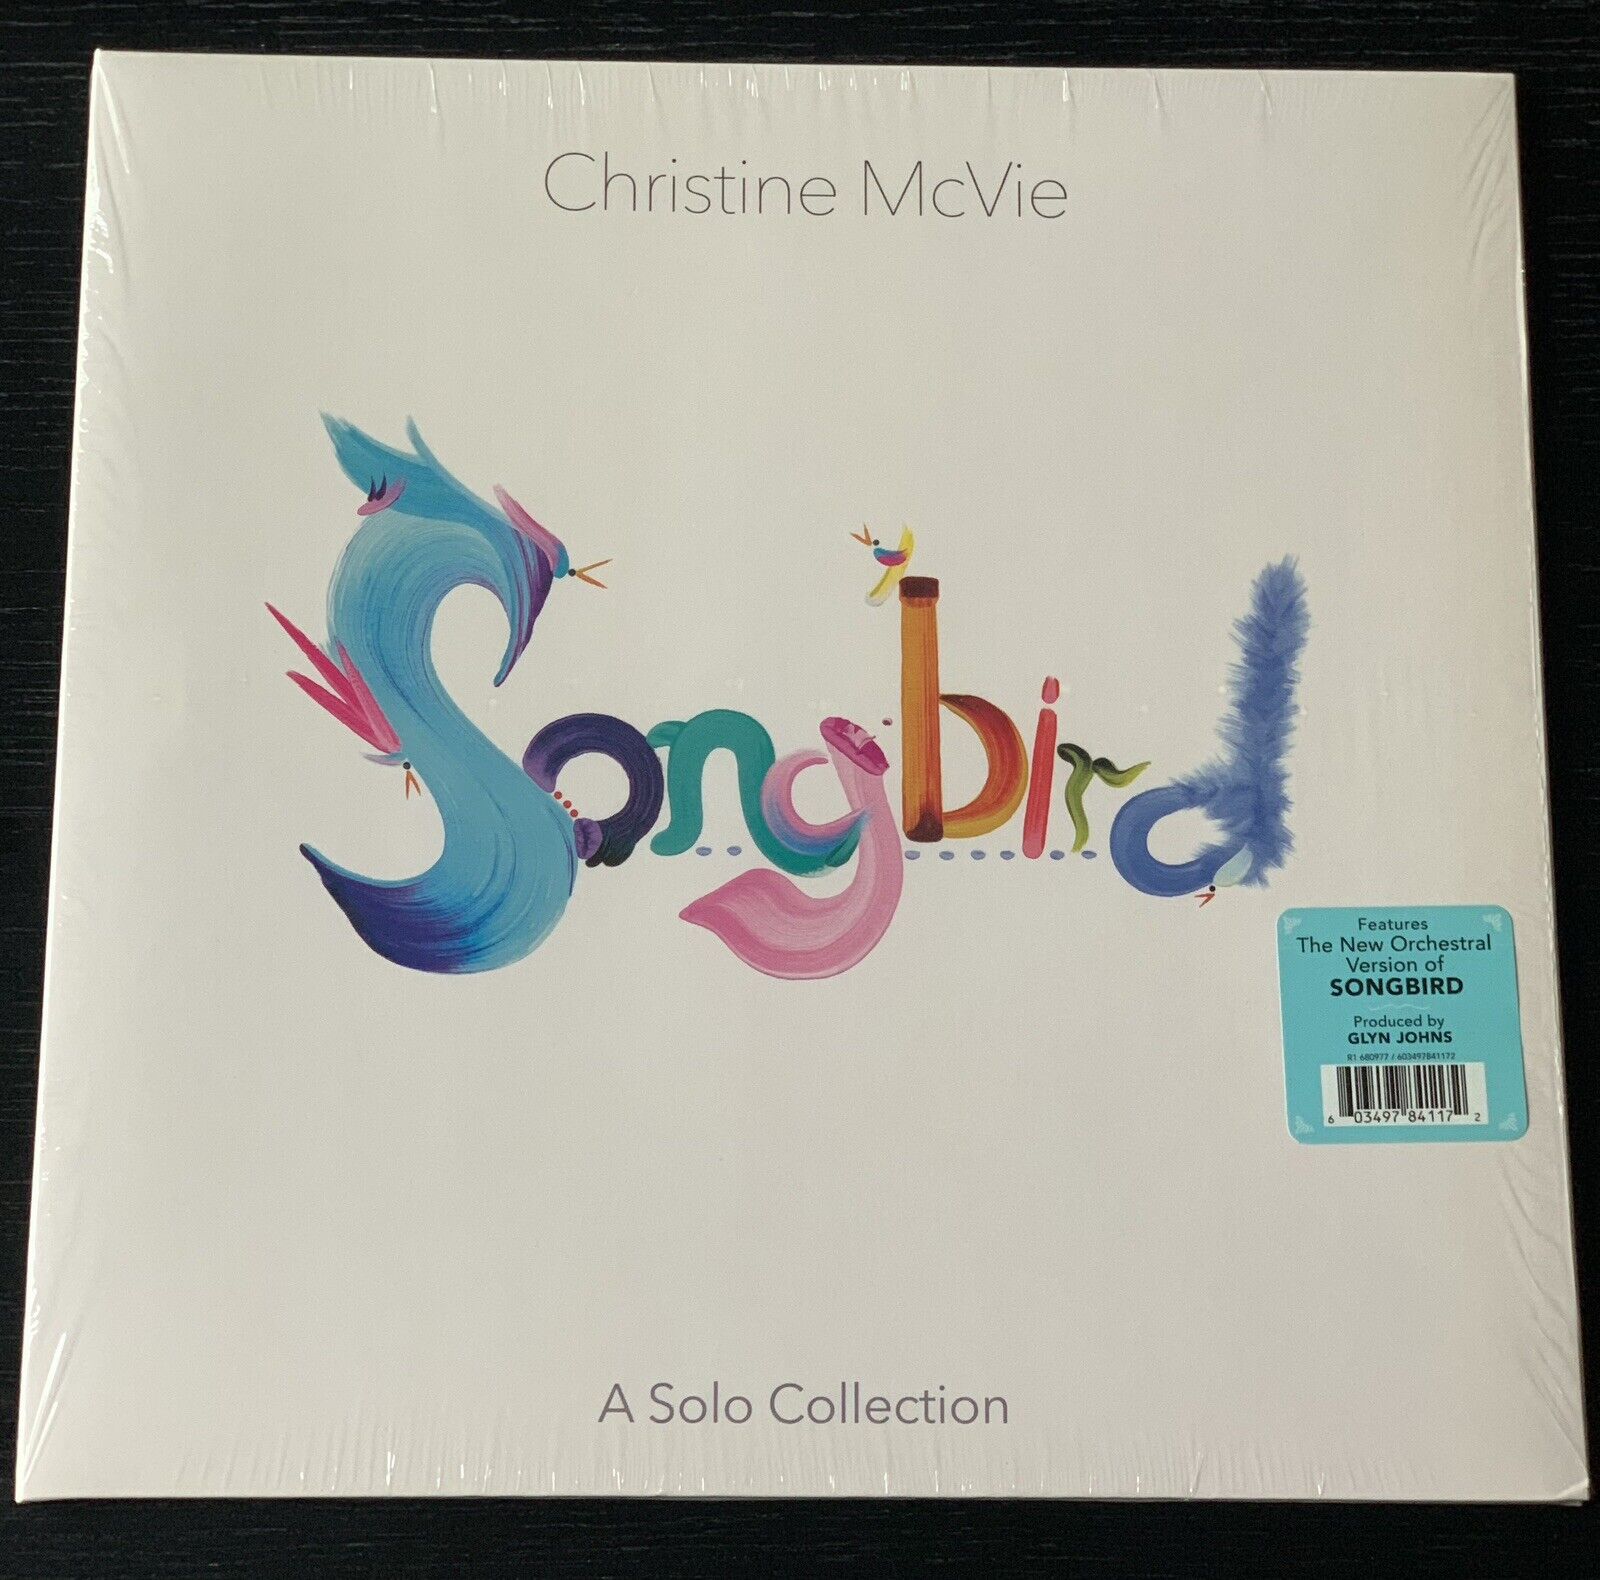 Christine McVie - Songbird (A Solo Collection) - Brand new sealed black vinyl LP